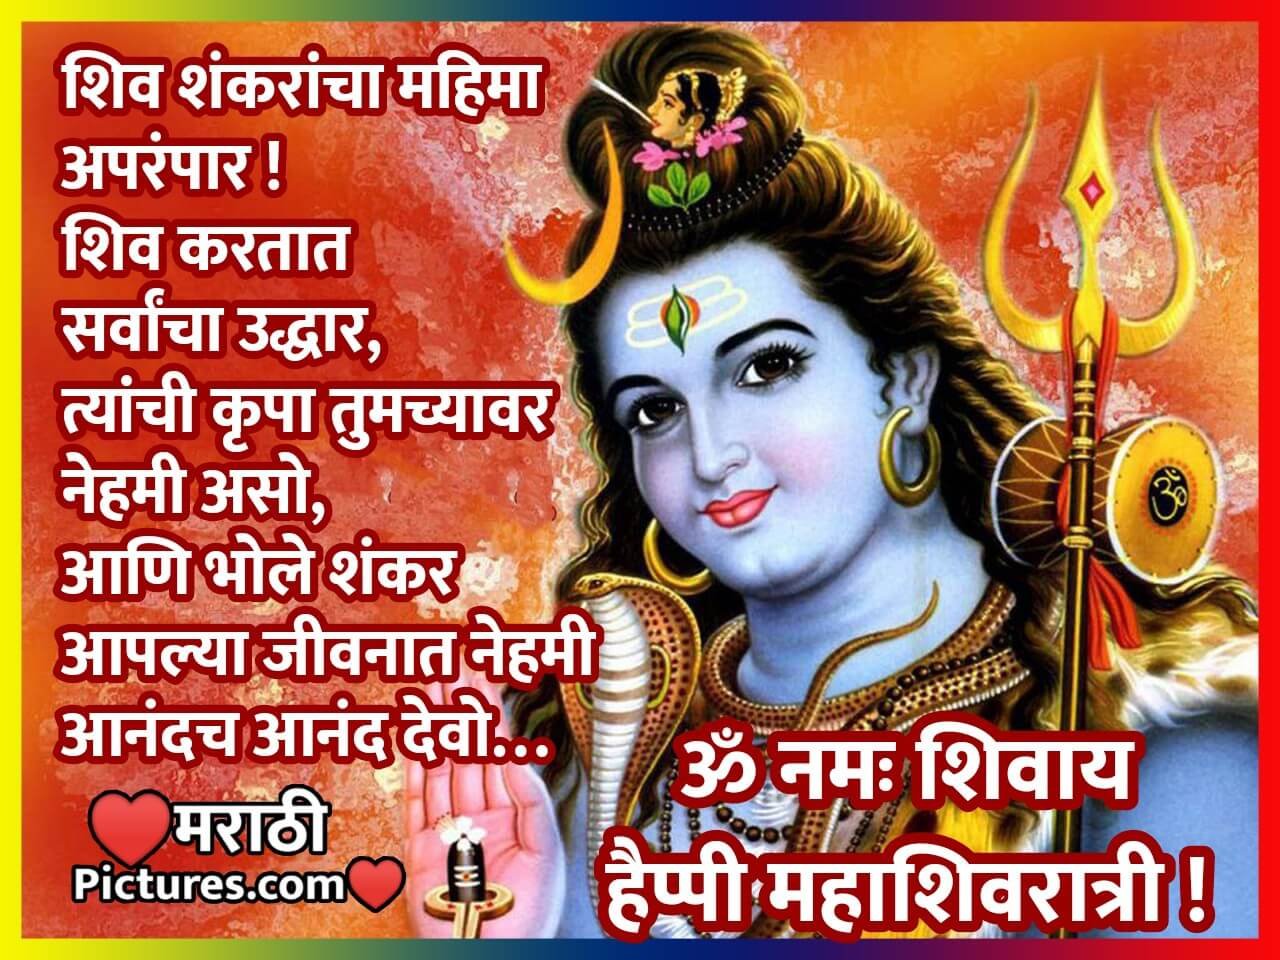 Happy Maha Shivratri Wishes In Marathi - MarathiPictures.com